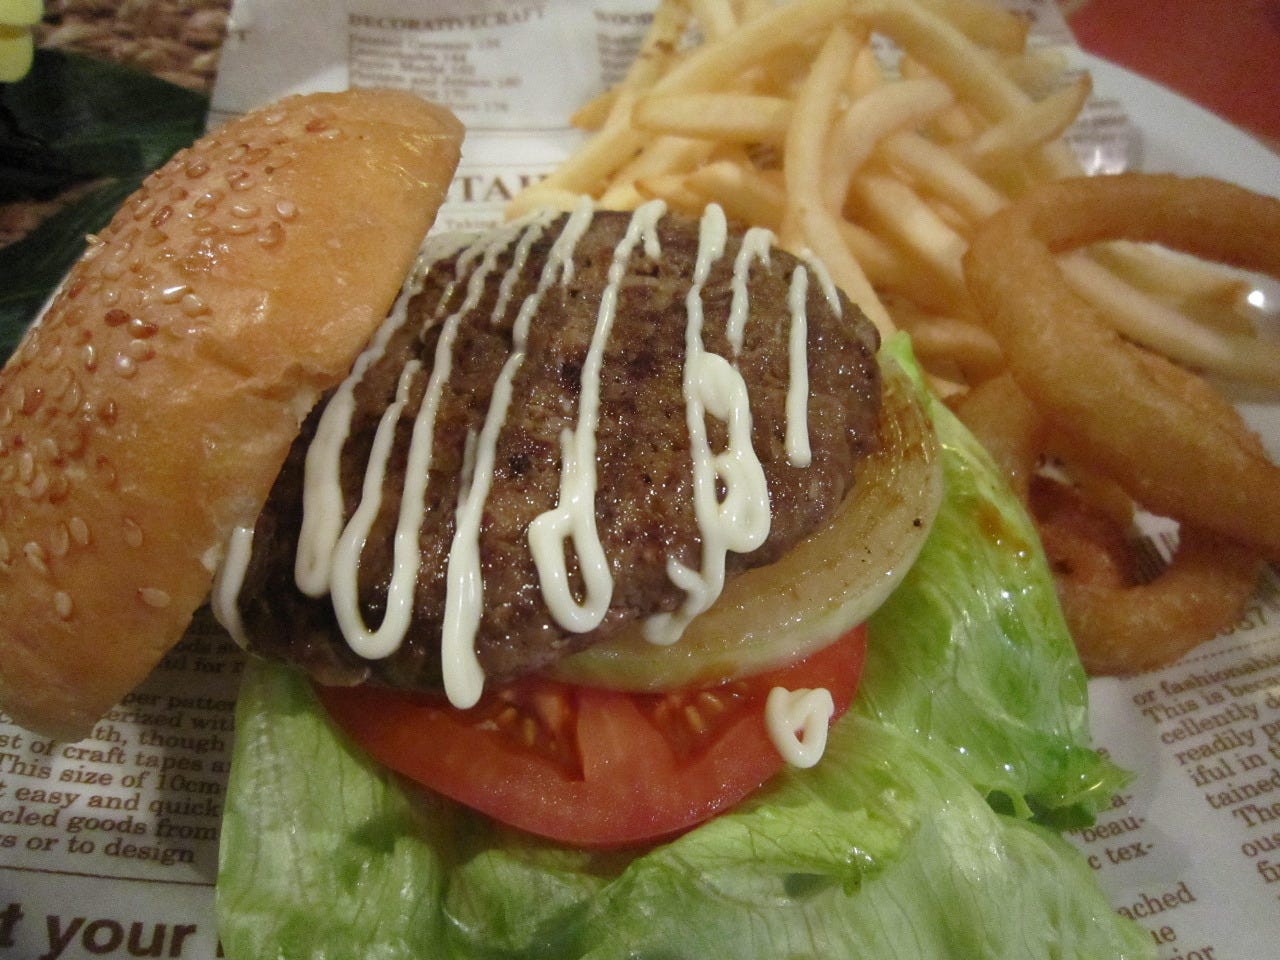 BurgerShop H&S